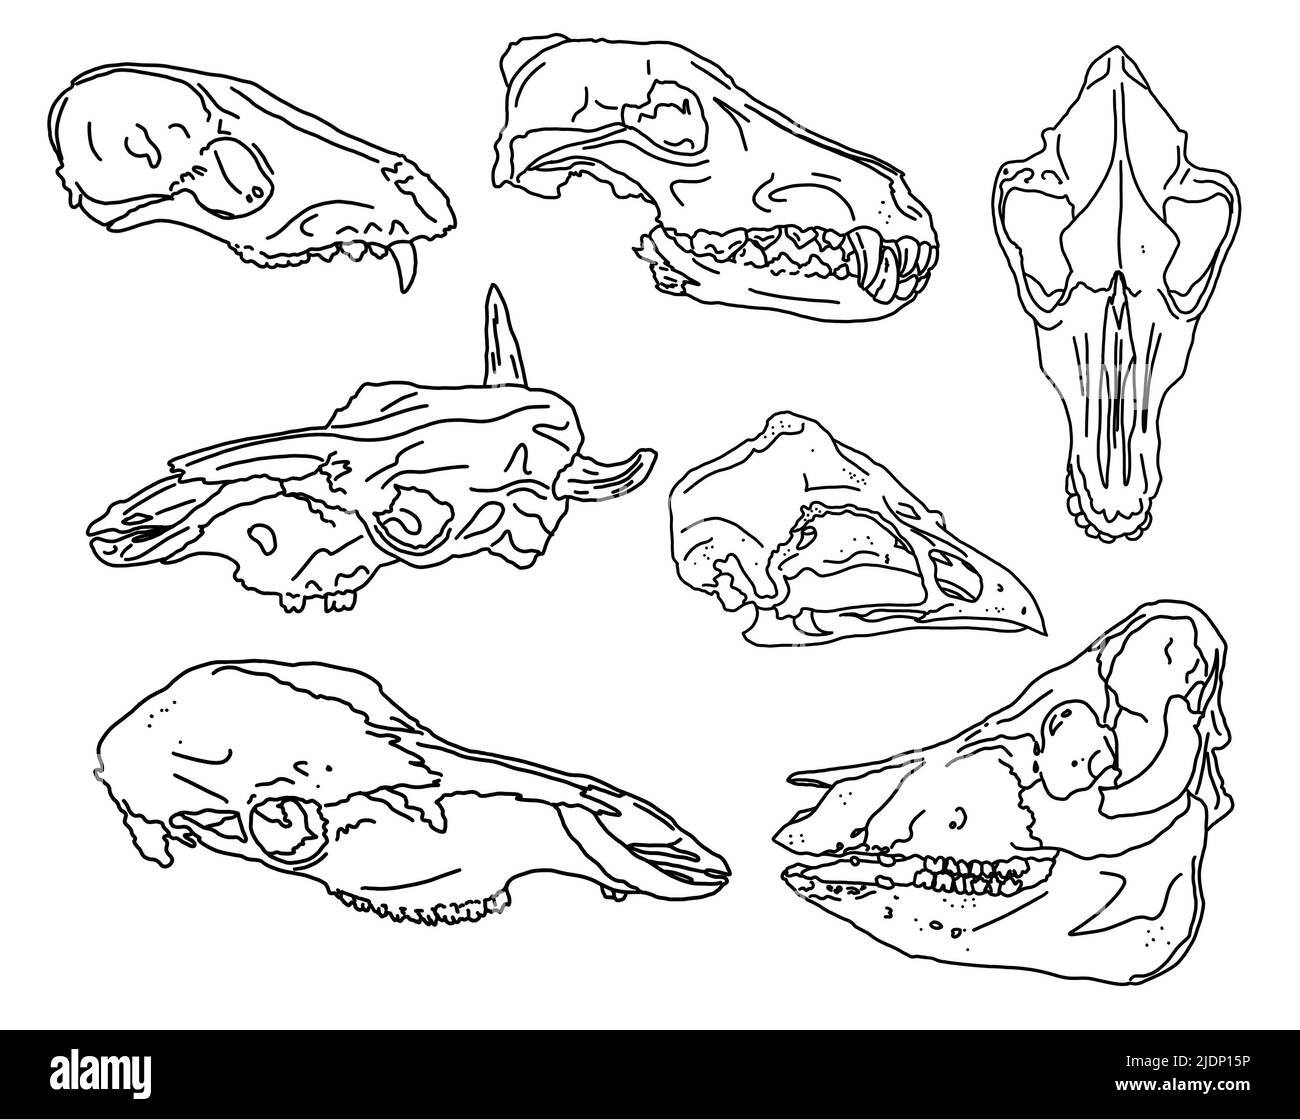 Graphical set. animal skulls linear art. Stock Photo